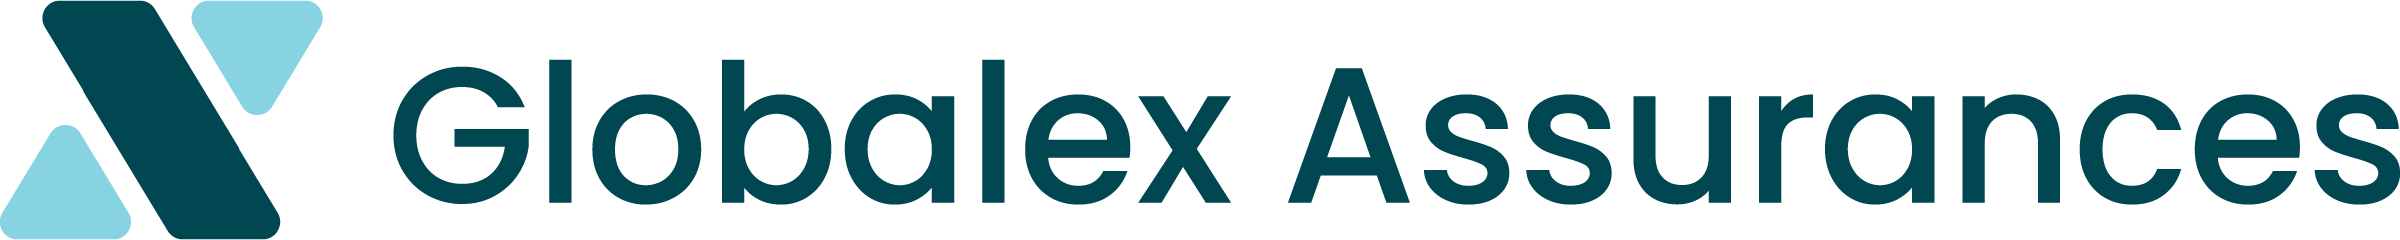 Globalex Assurances launches in Quebec